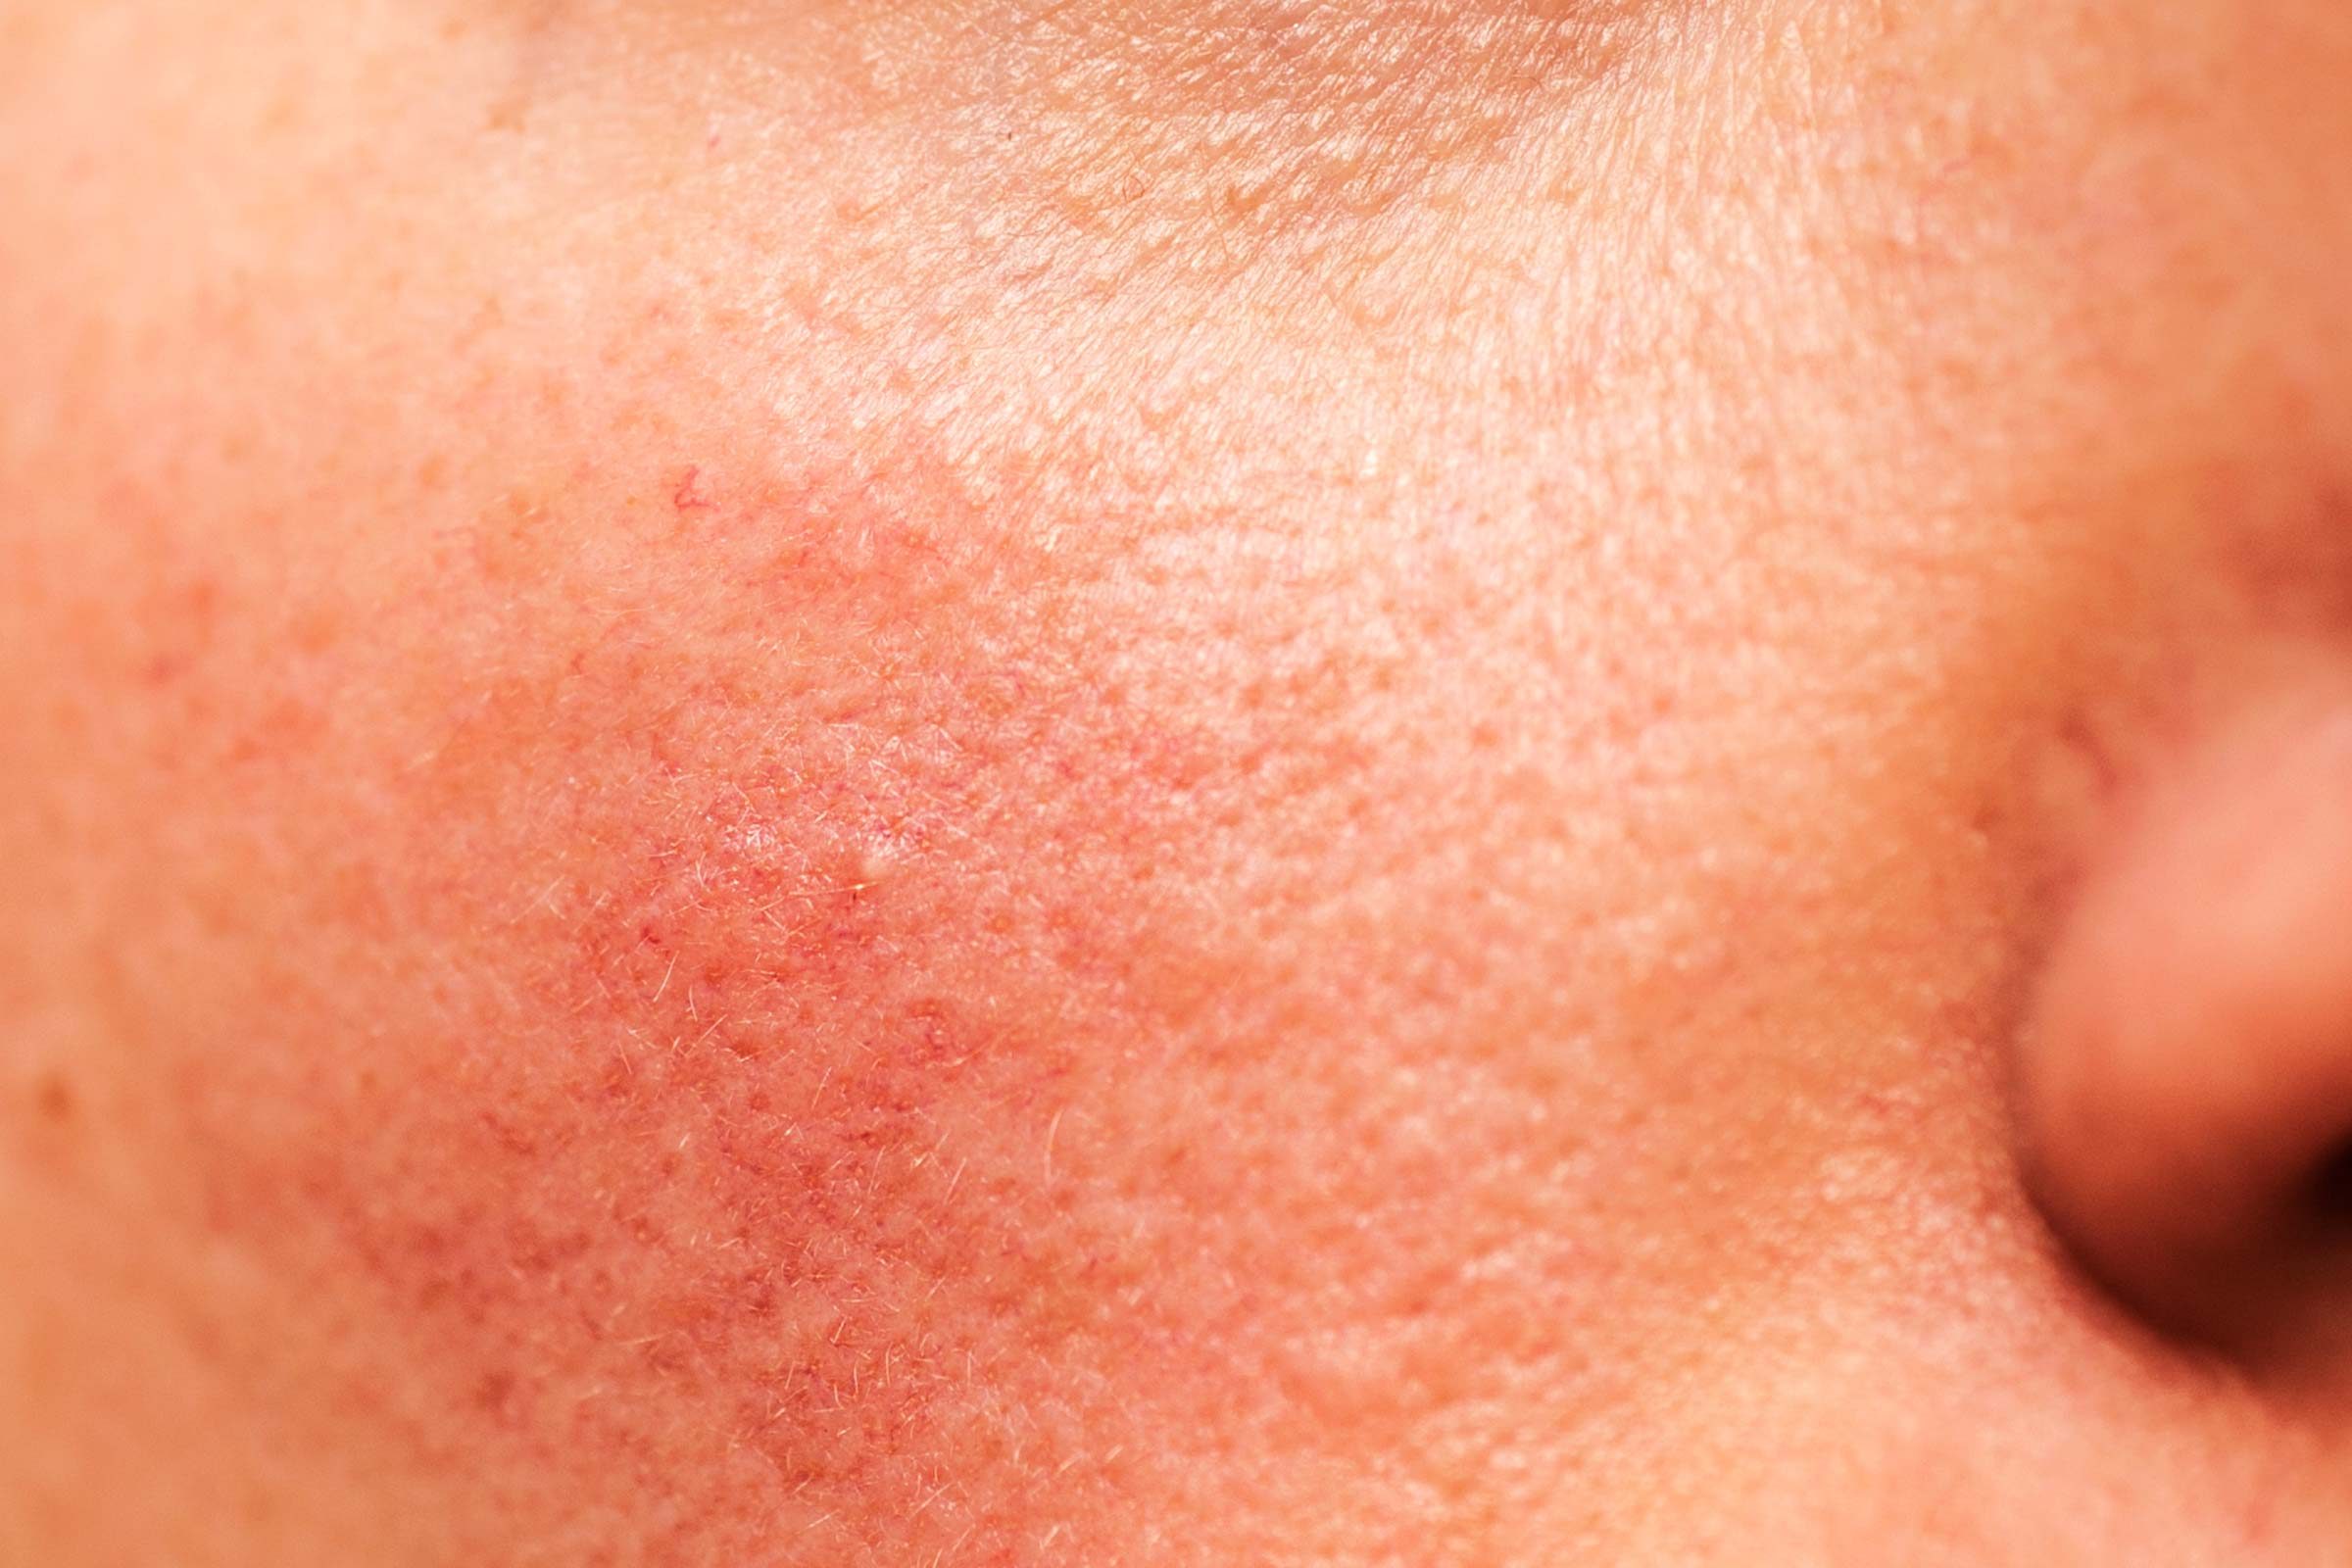  Skin  Disease  Signs of Disease  Your Skin  Can Reveal Best 